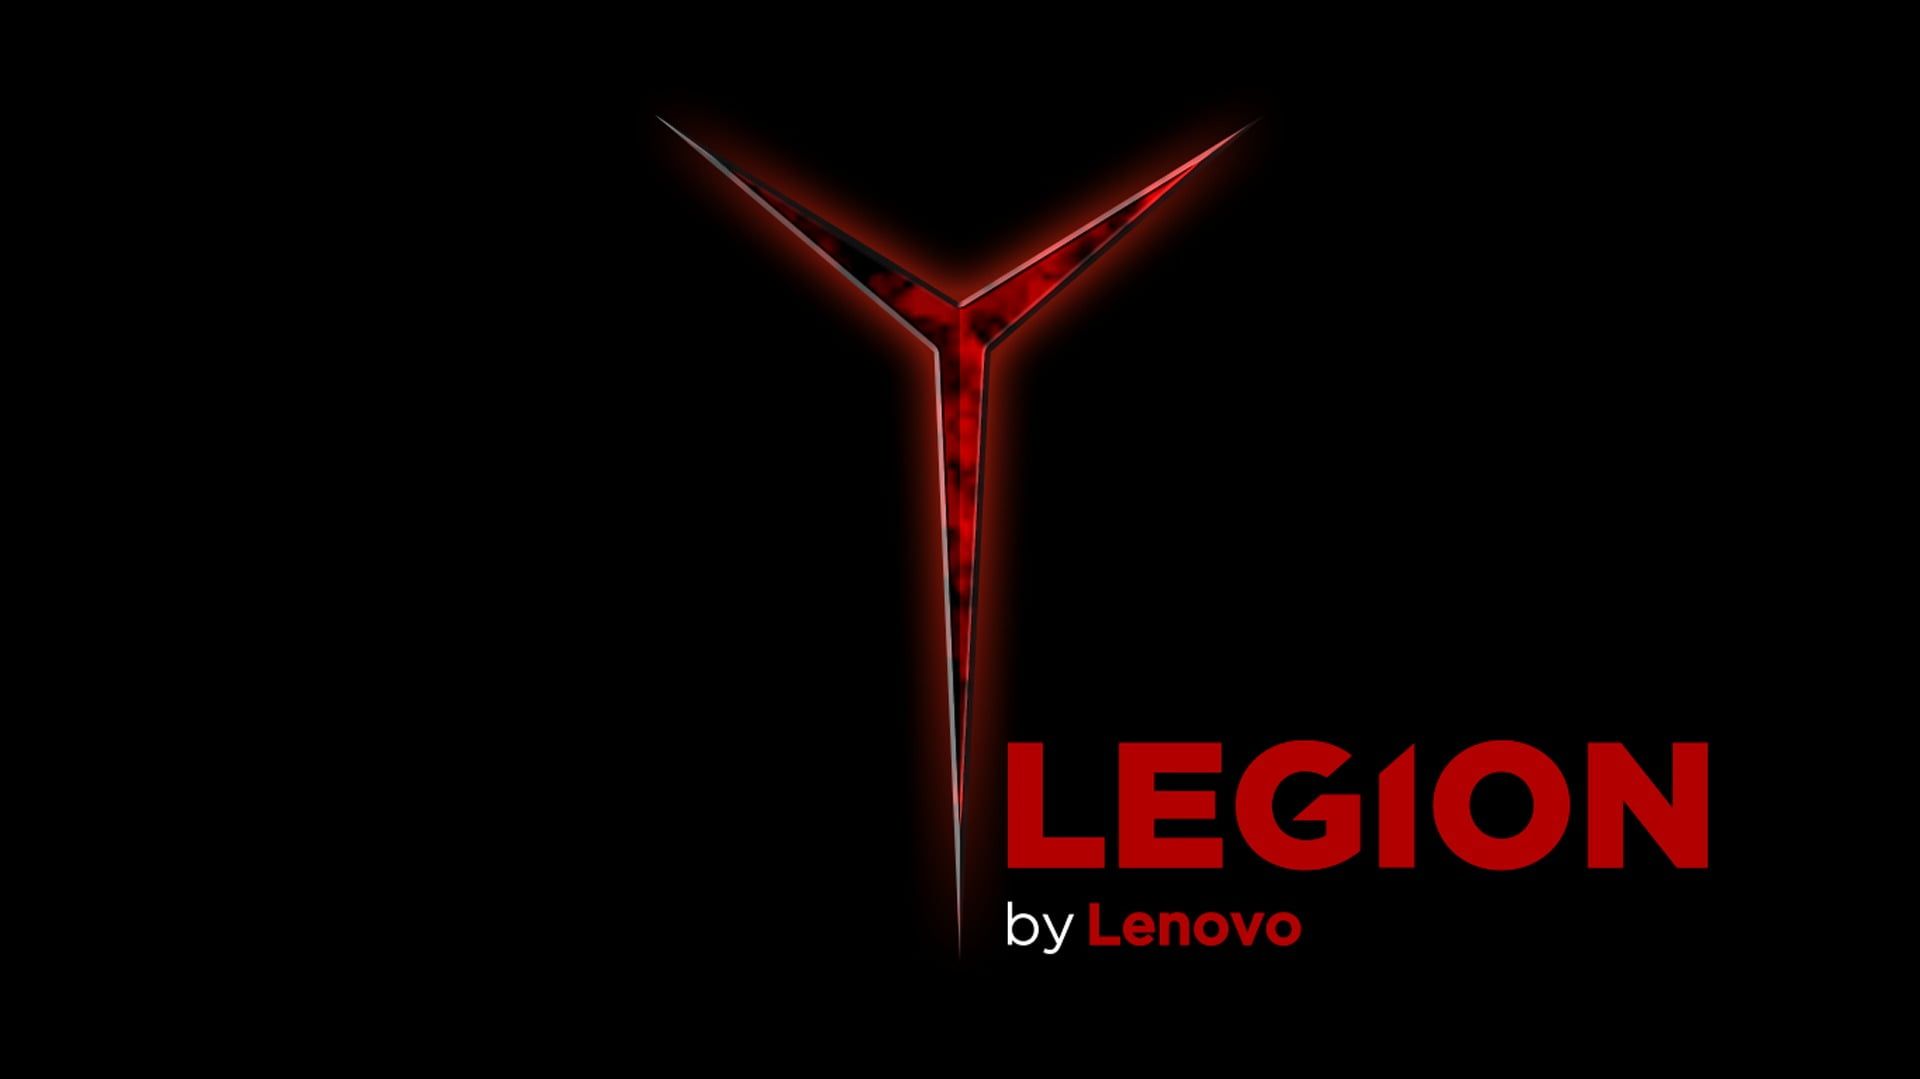 Lenovo wallpaper, lenovo legion, PC gaming, red, illuminated, black background. Lenovo wallpaper, Computer wallpaper desktop wallpaper, HD wallpaper for laptop